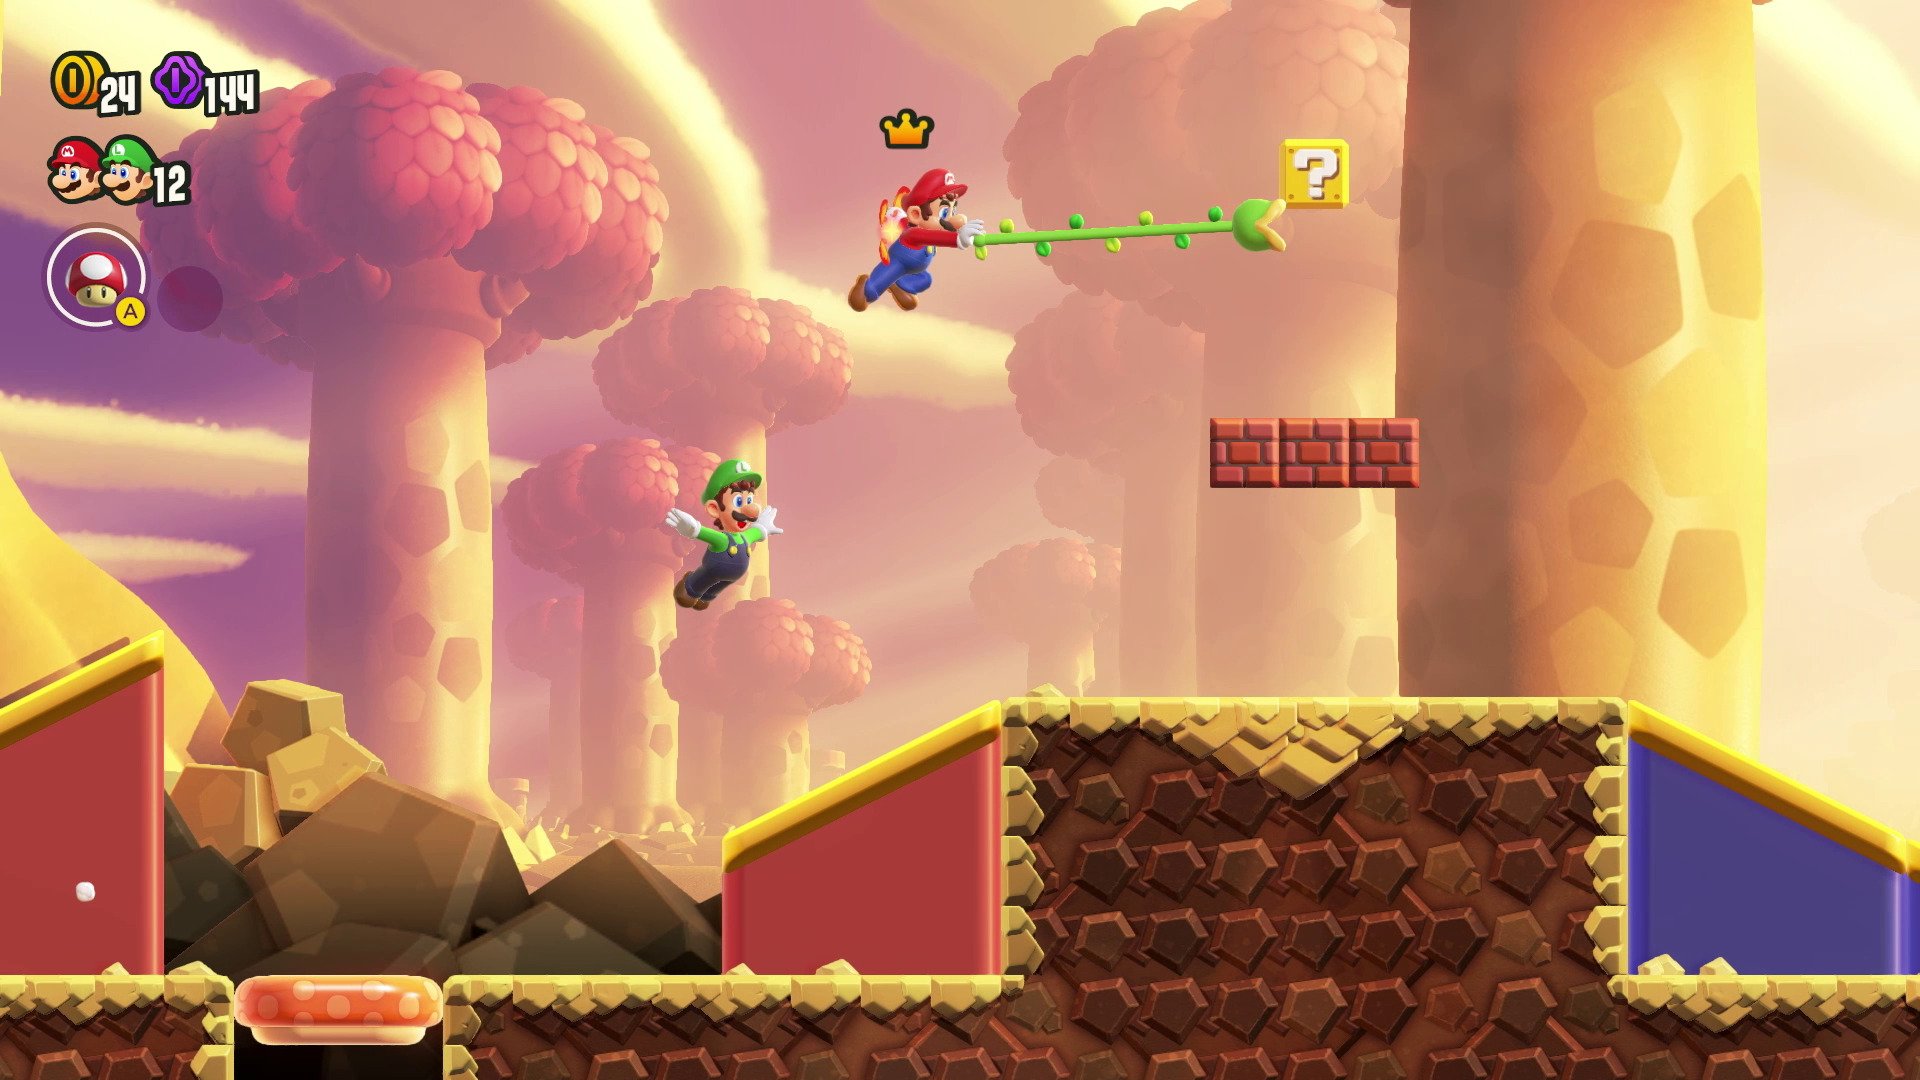 Super Mario Bros. Wonder has now leaked online